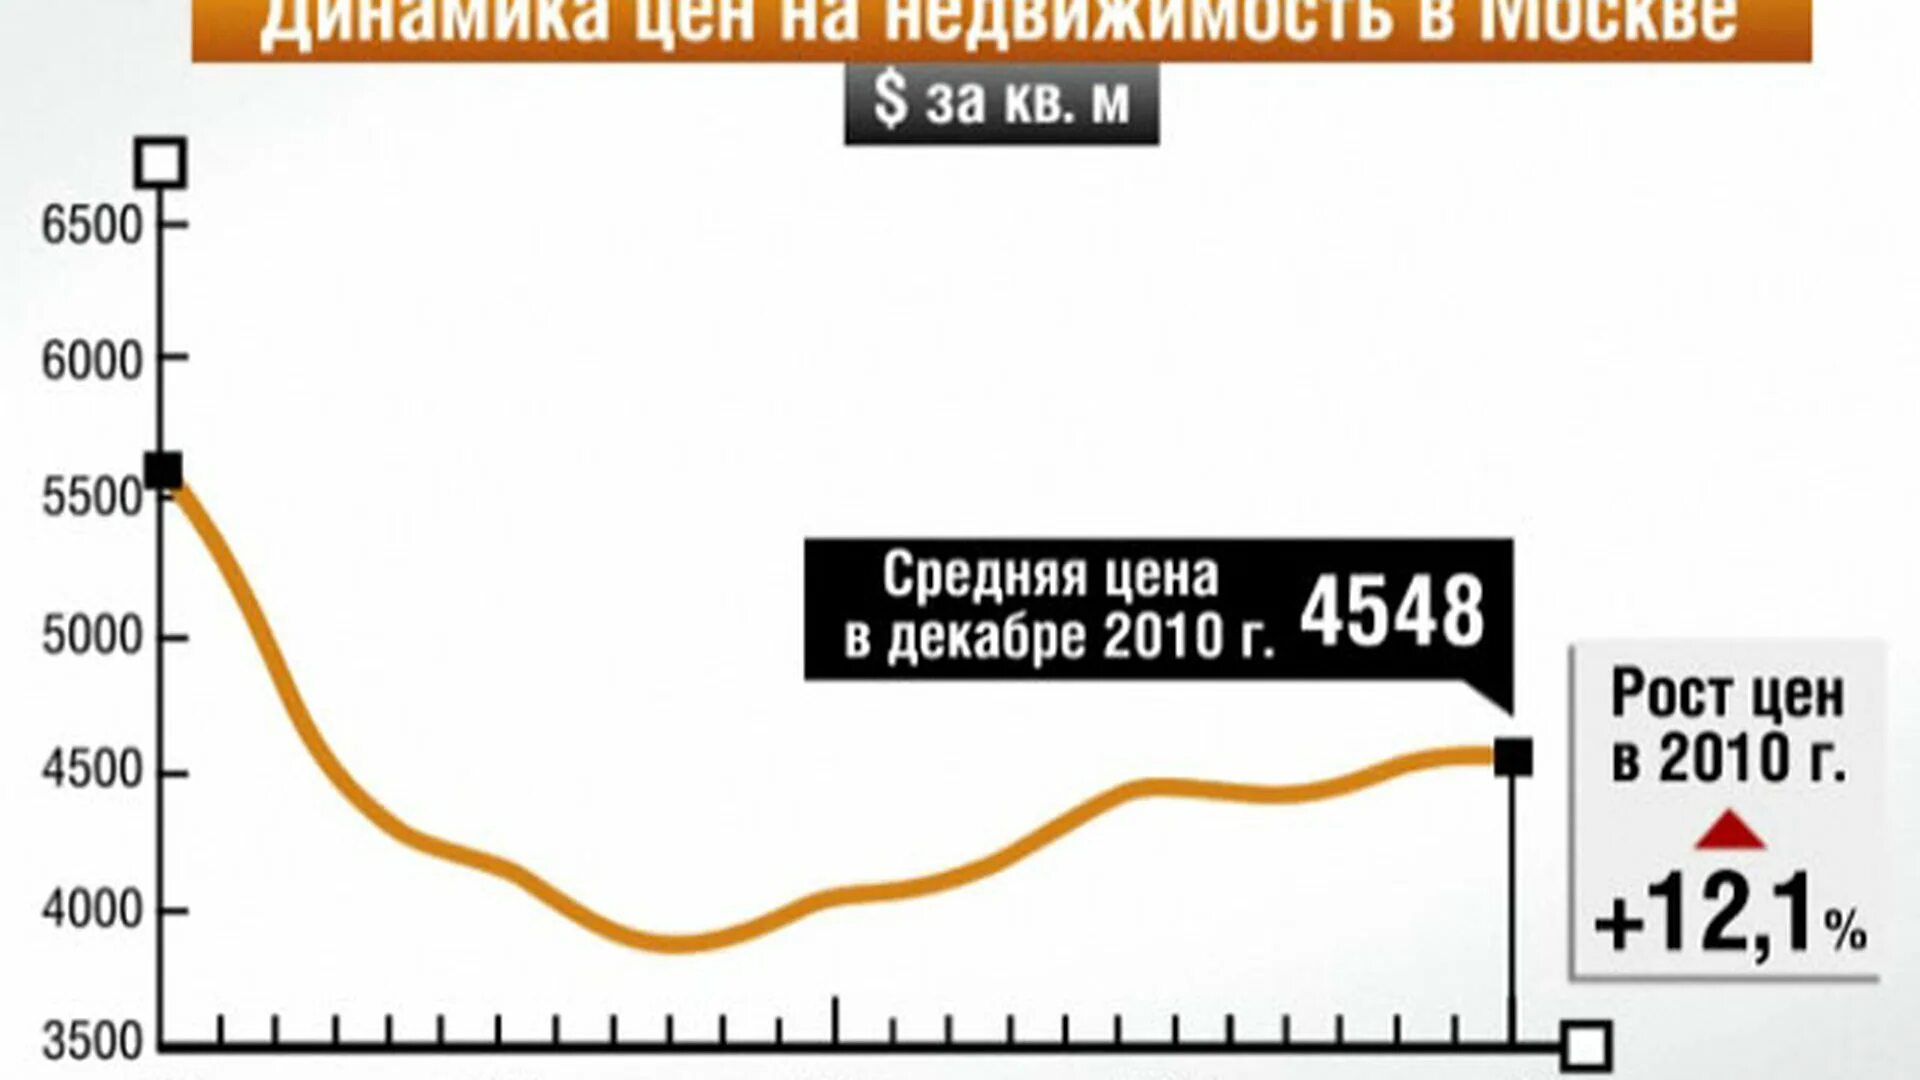 Динамика стоимости недвижимости. Динамика цен на недвижимость в Москве за 20 лет. График стоимости недвижимости в Москве. Динамика роста цен на недвижимость. Цена недвижимости за 20 лет